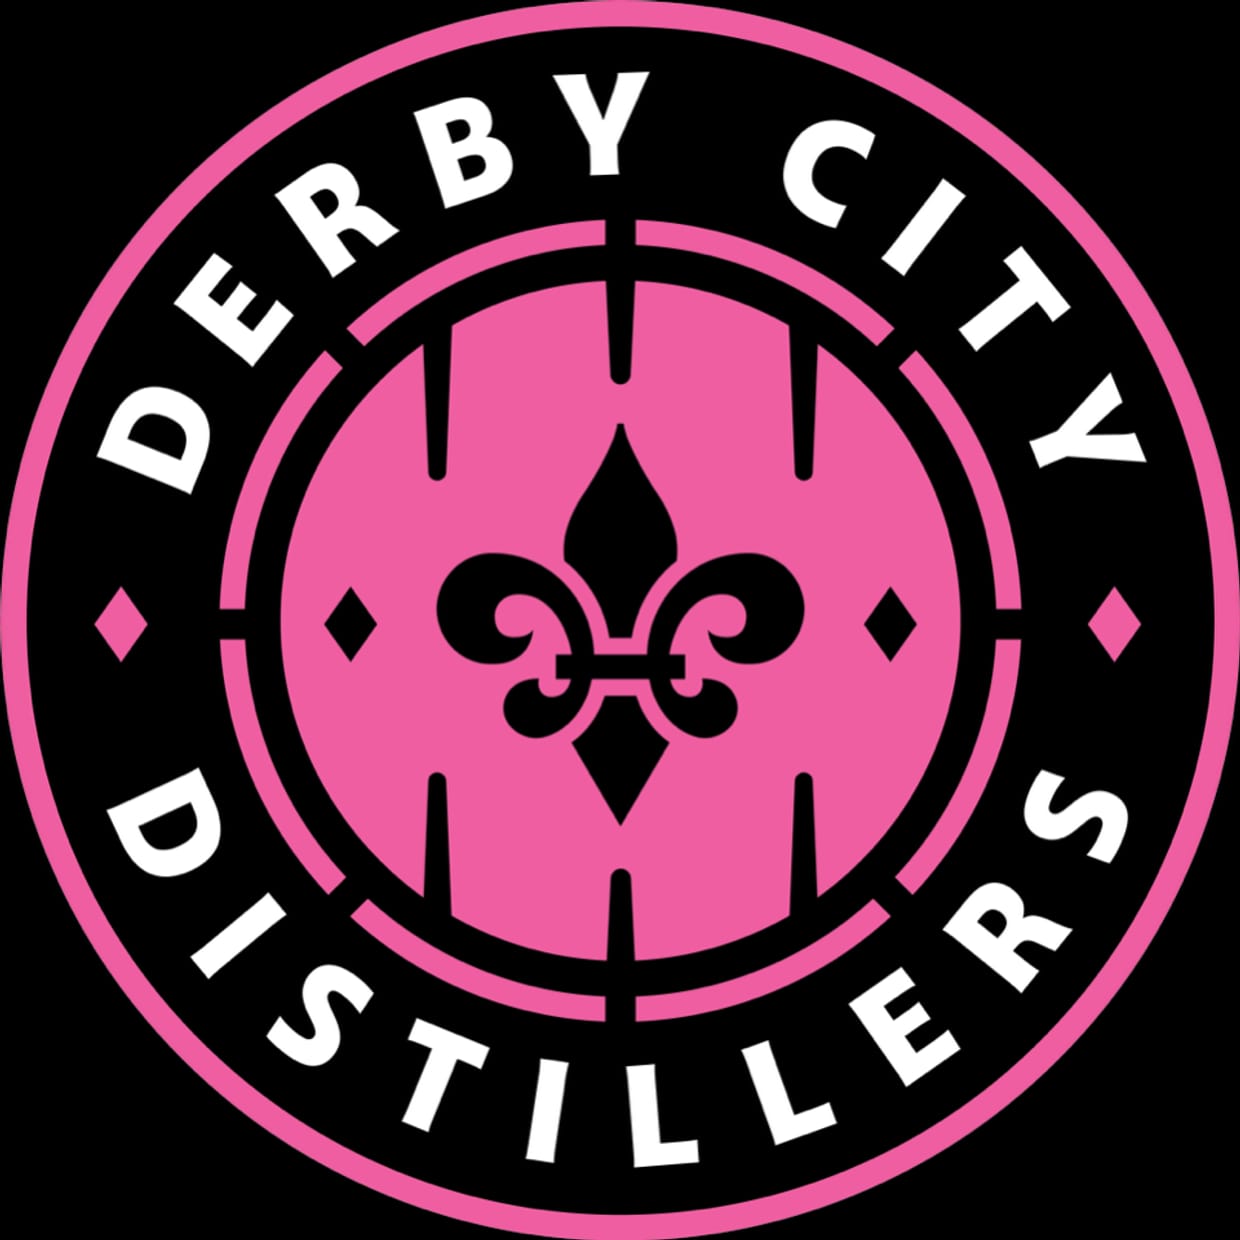 Derby City Distillers v. Cincinnati Warriors